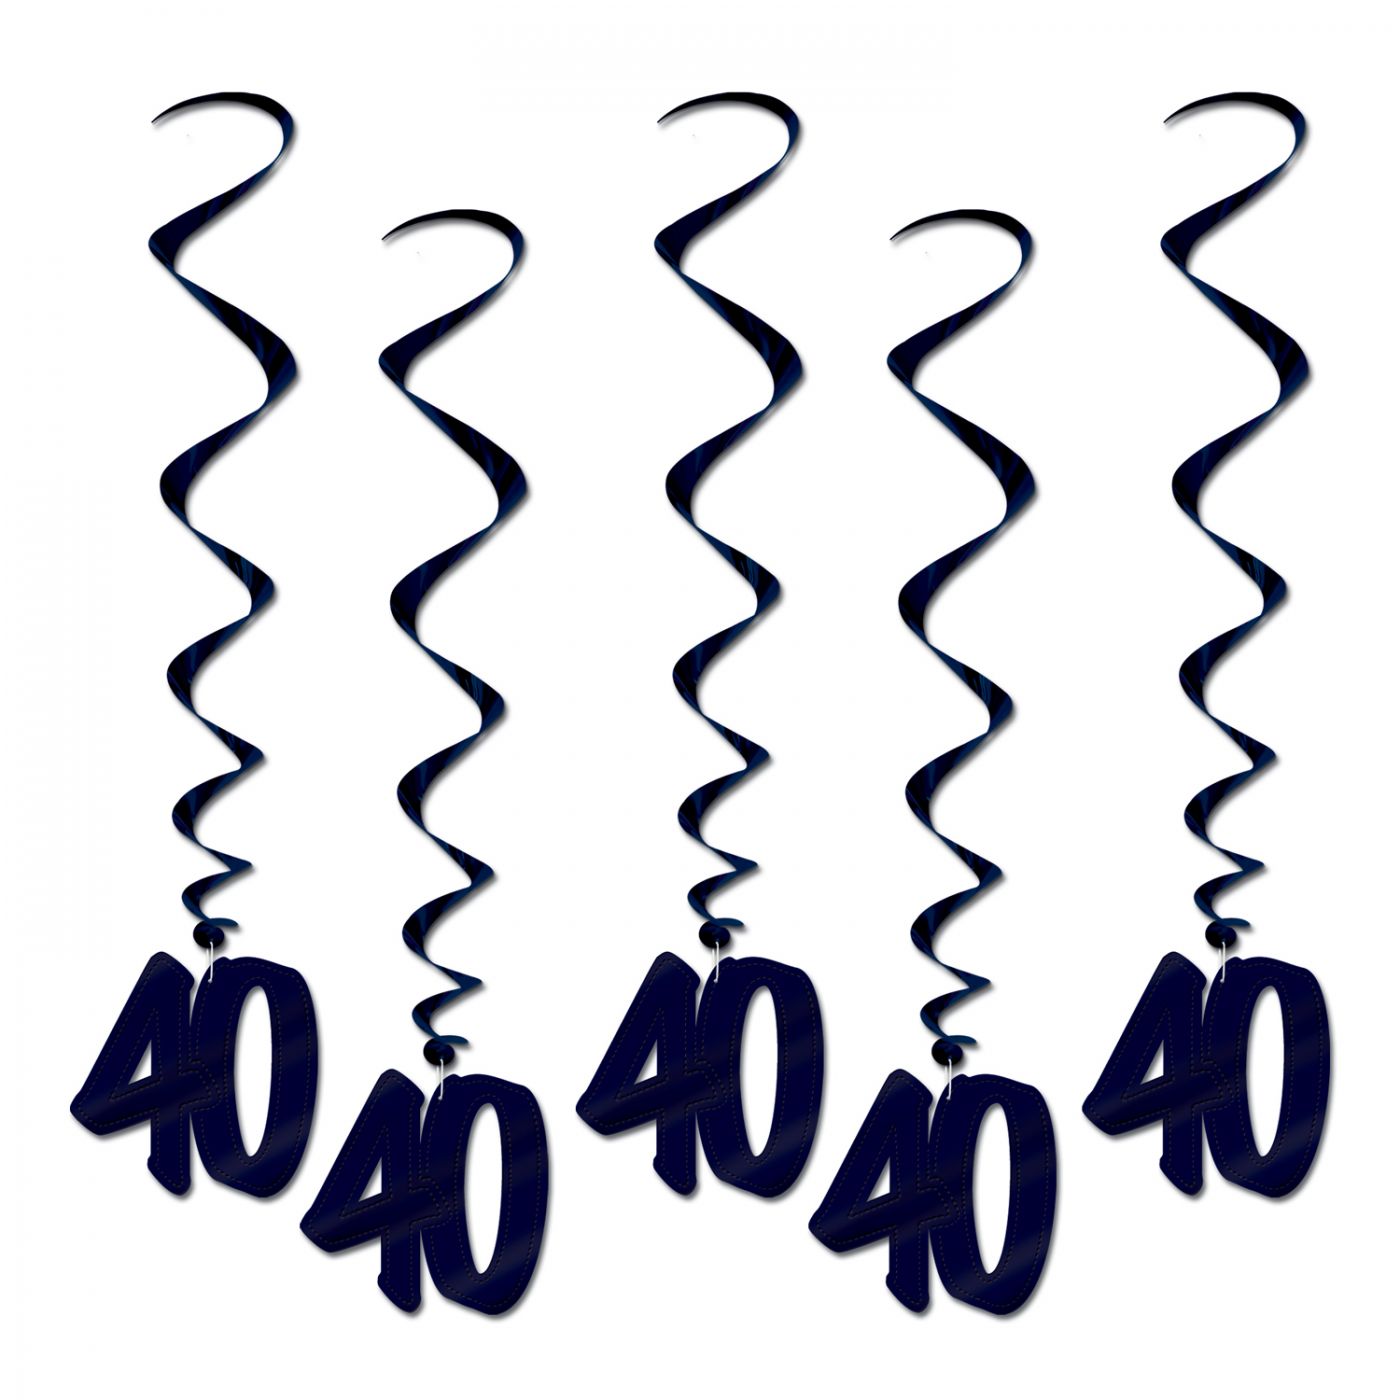  40  Whirls (6) image